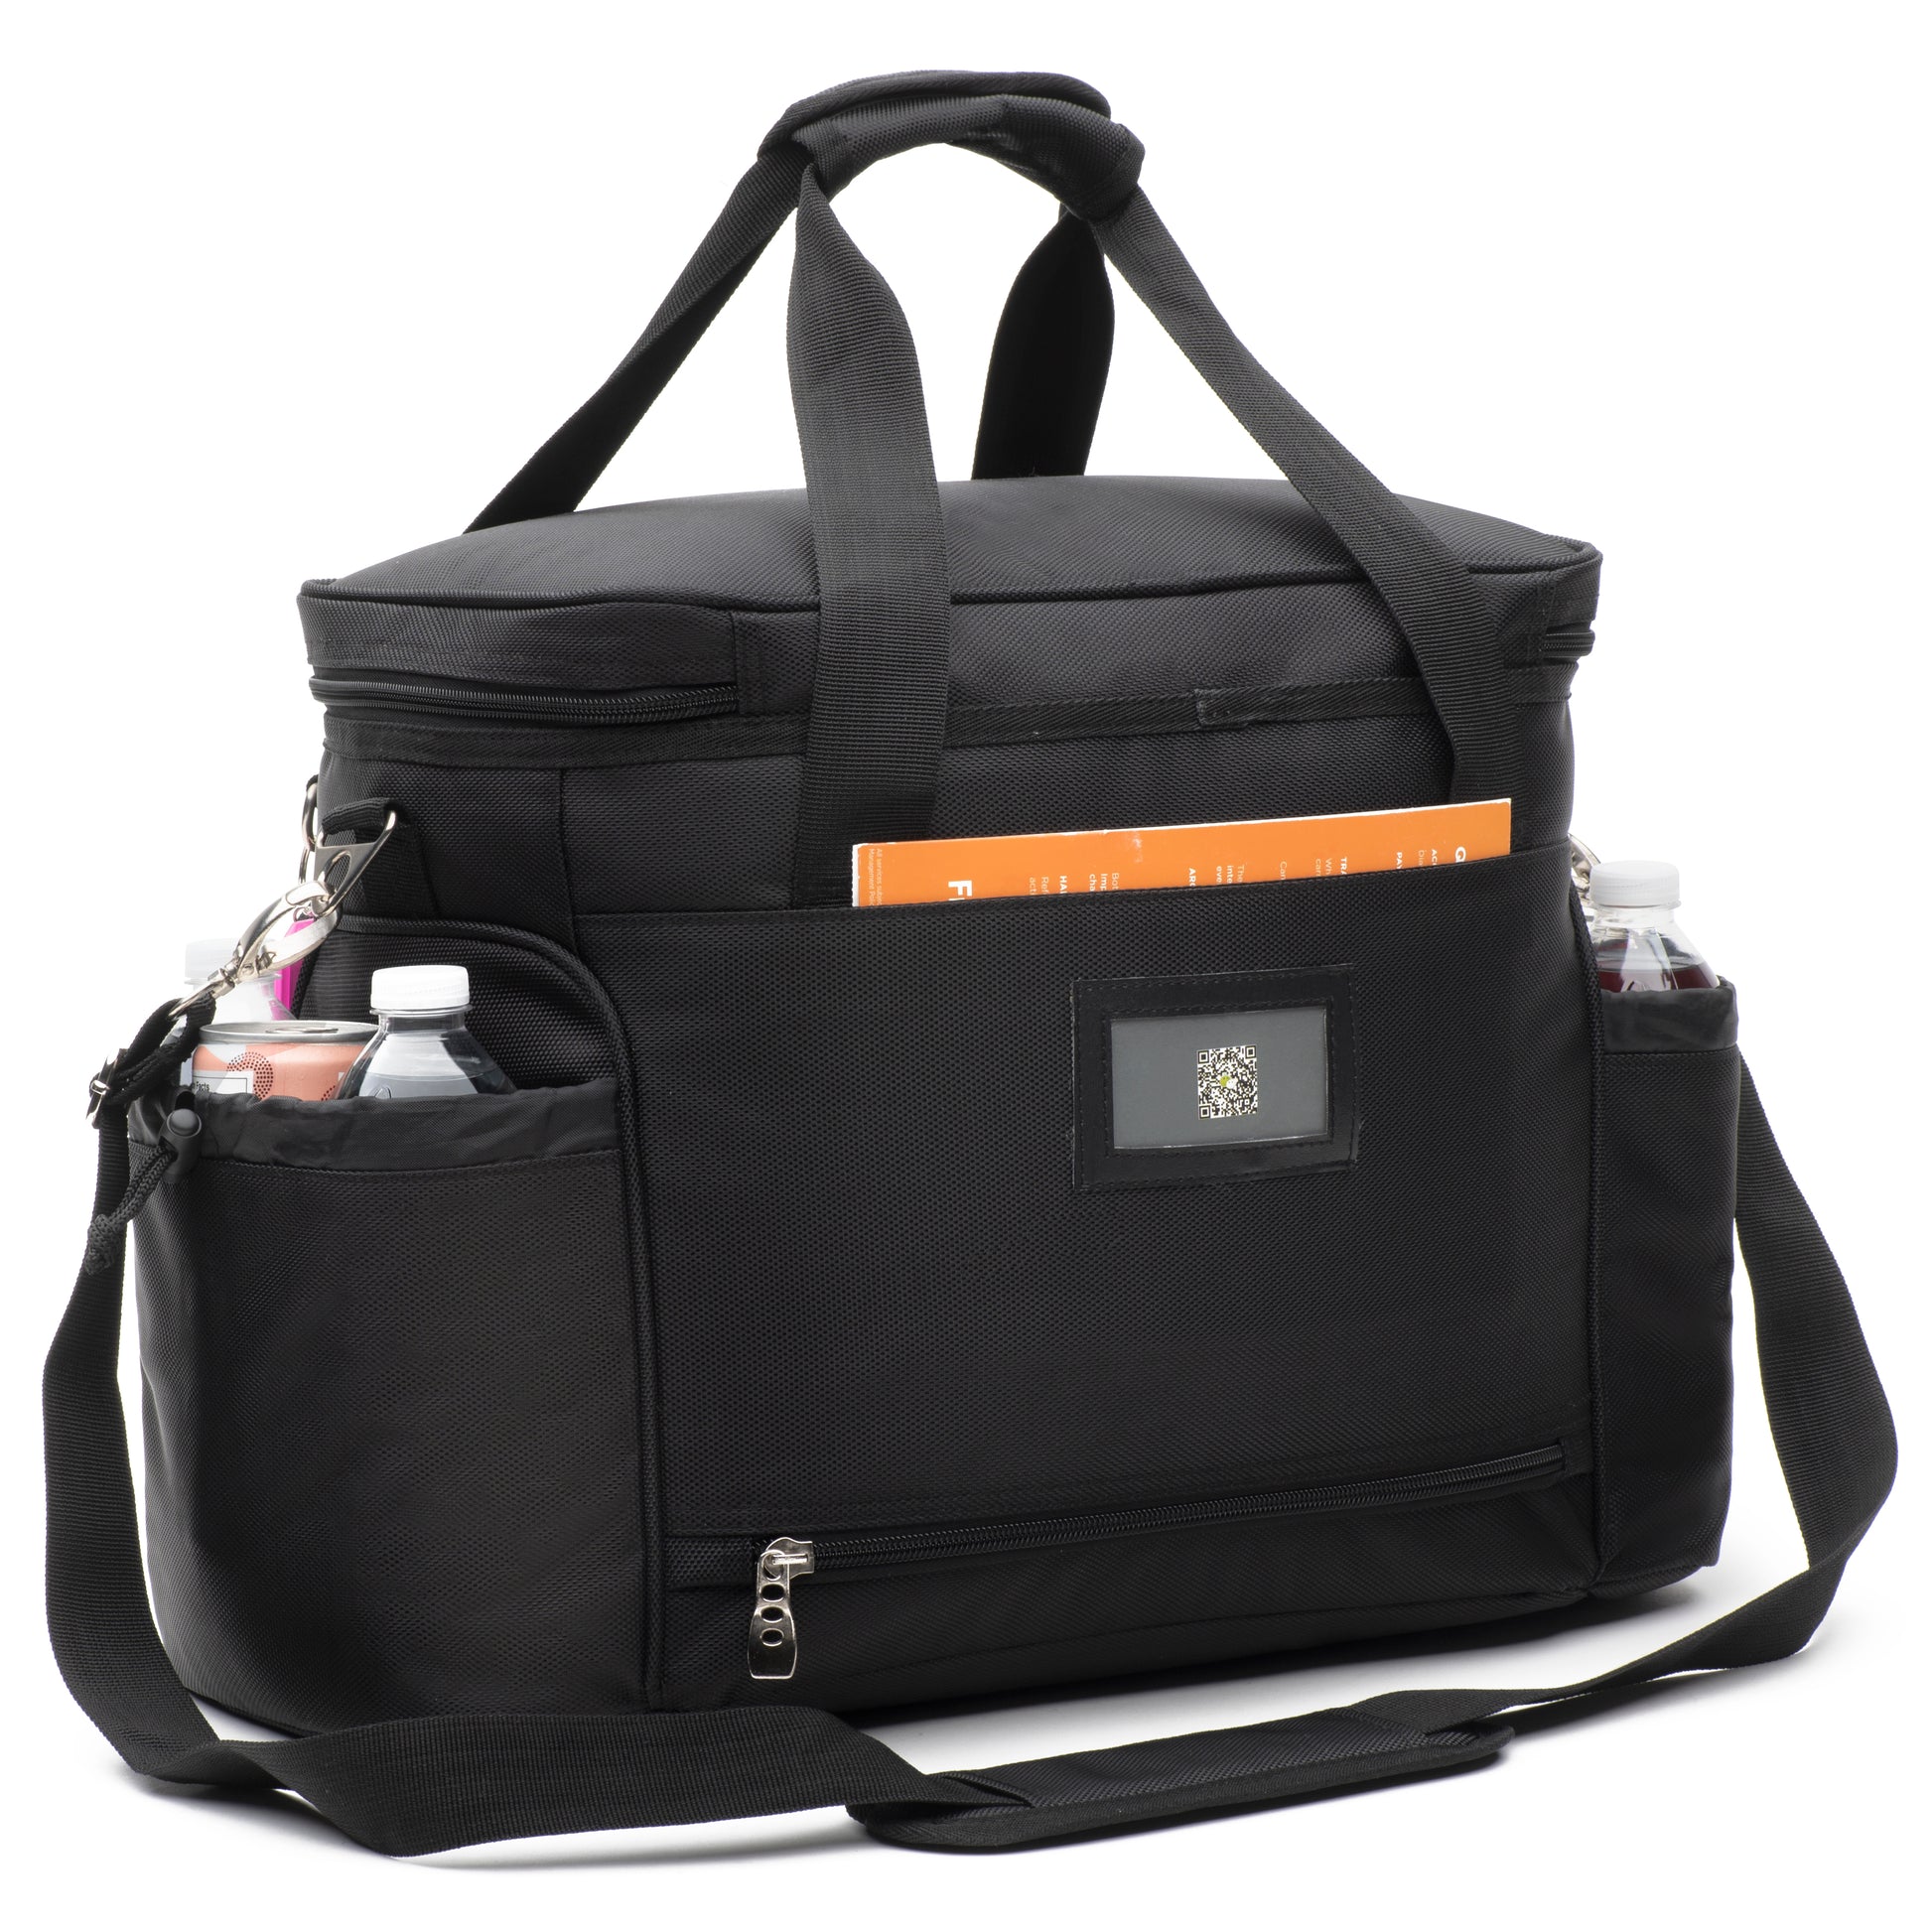 BERGGYLTA Lunch bag - black 14x11x22 cm (5 ½x4 ¼x8 ¾ )